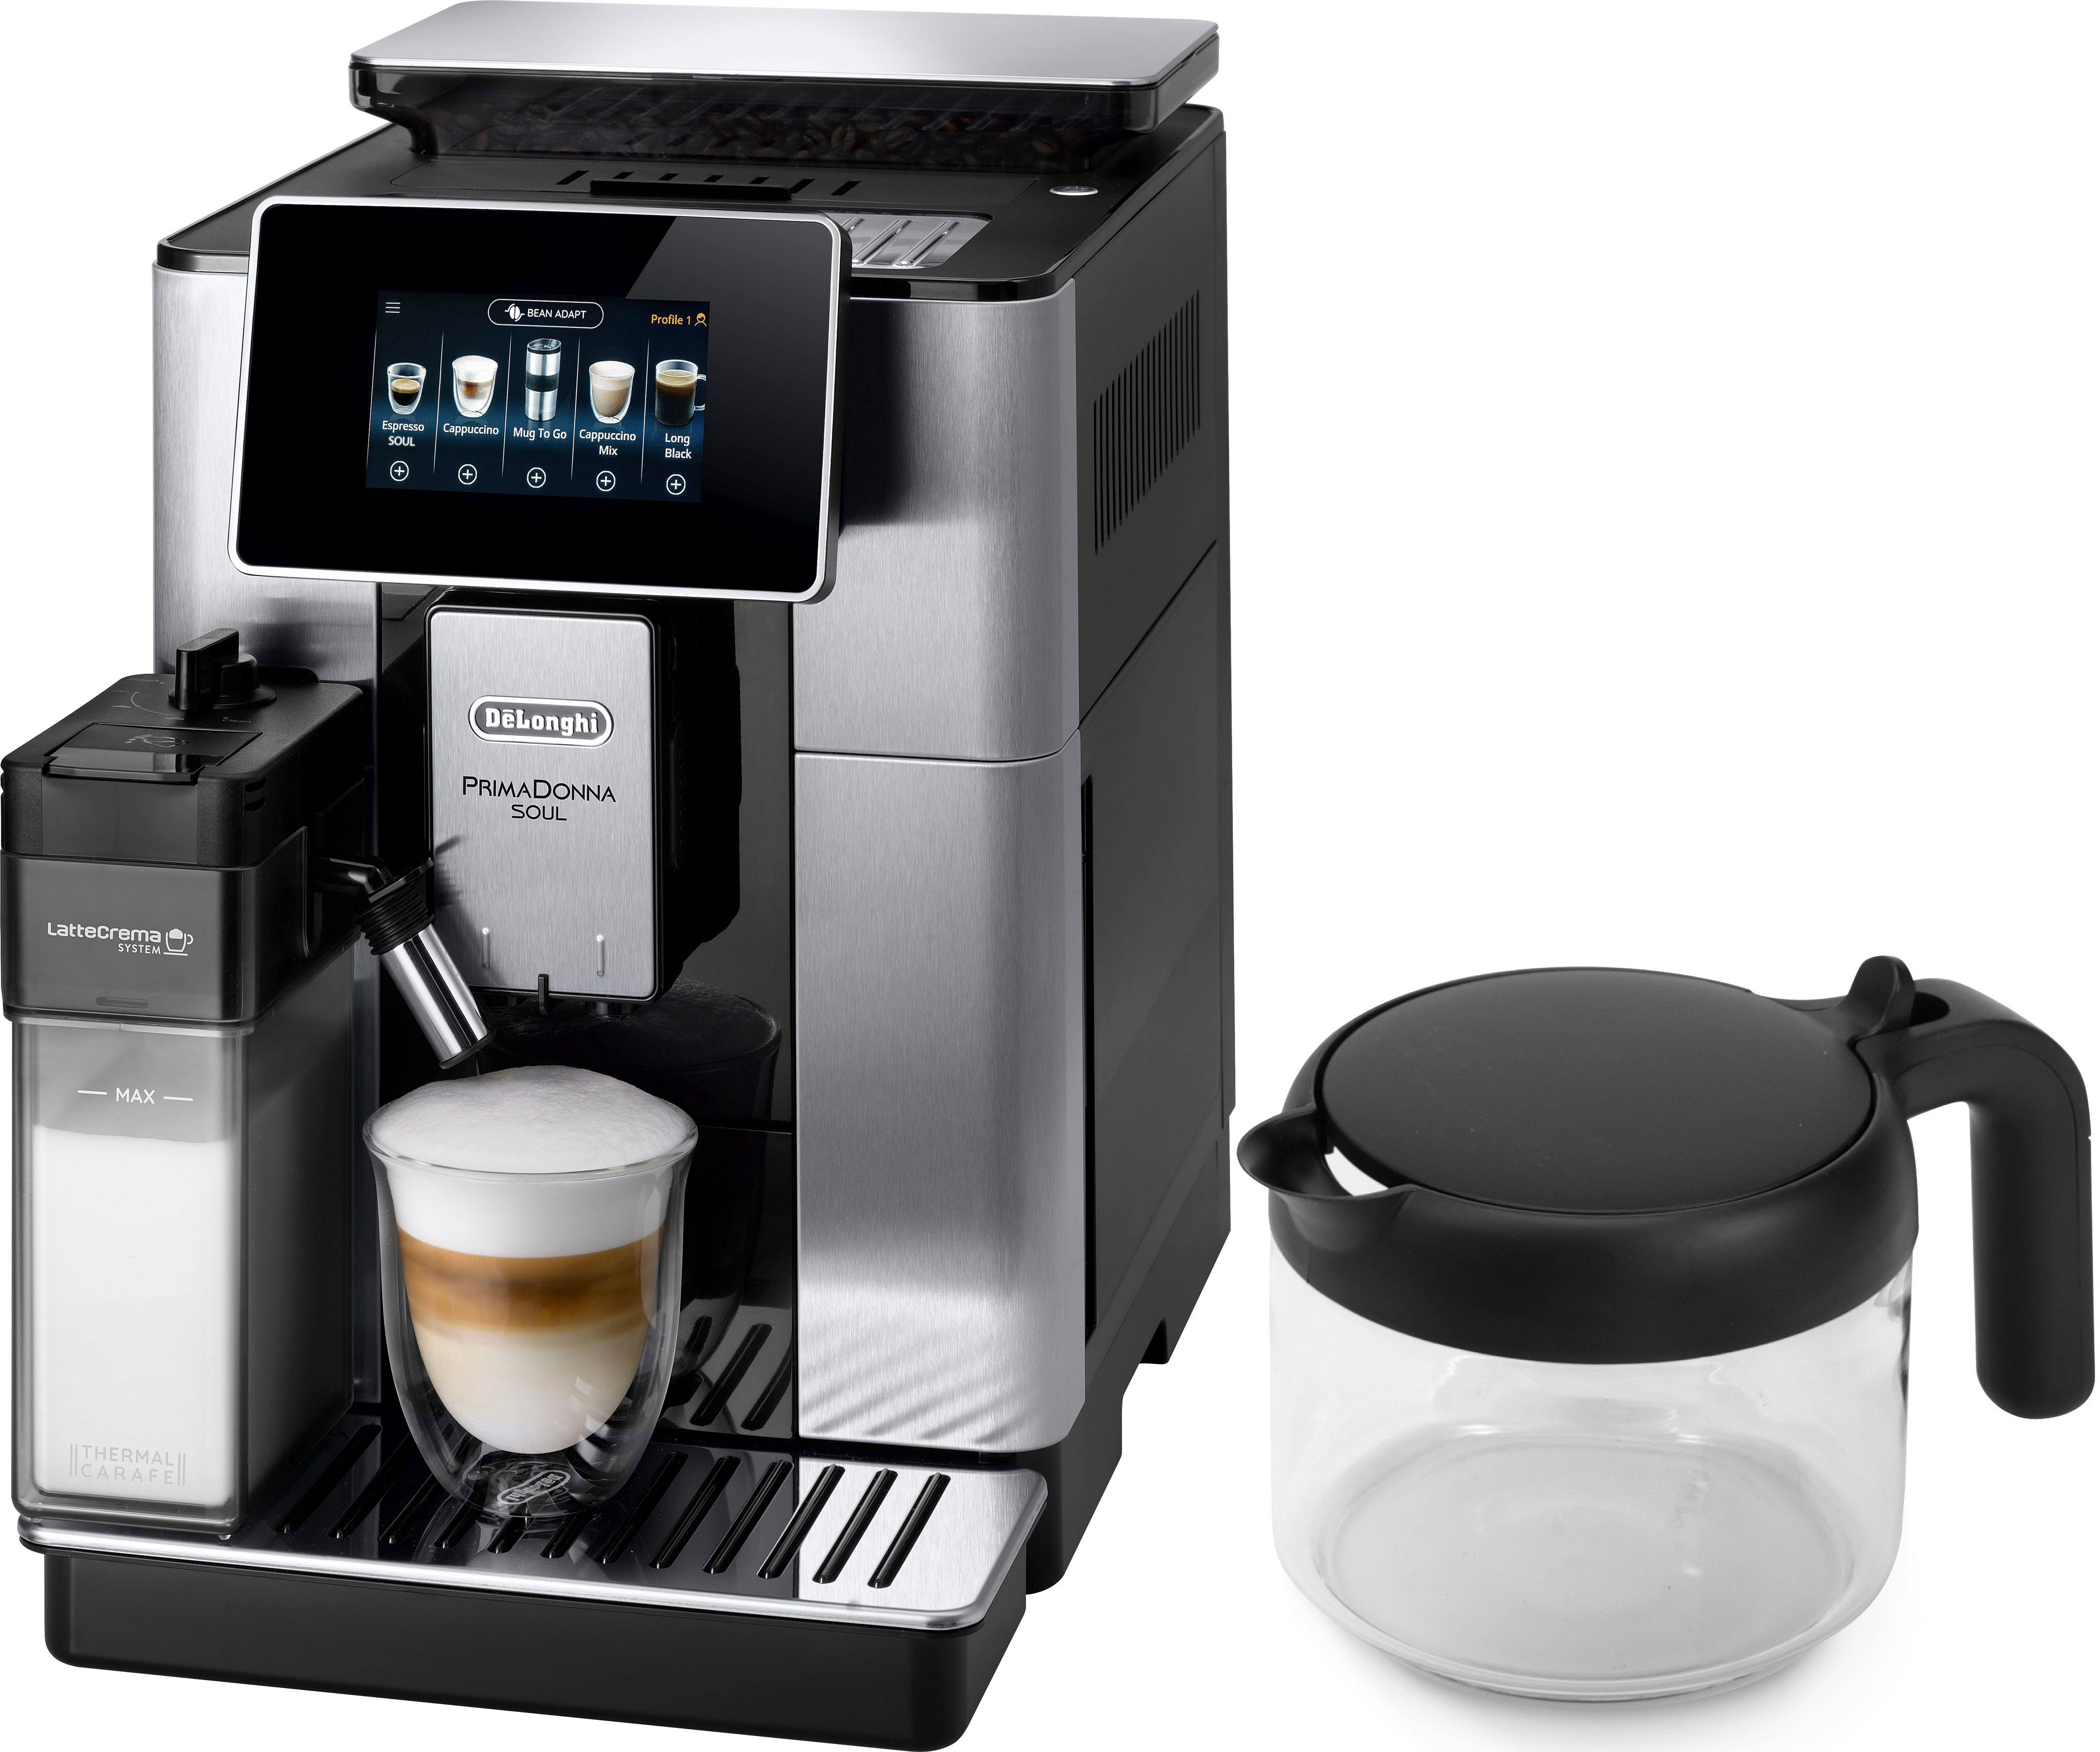 De'Longhi Kaffeevollautomat PrimaDonna Soul Gläser-Set ECAM im von 610.75.MB, 46,90 Wert UVP € € inkl. Kaffeekanne UVP + 29,99